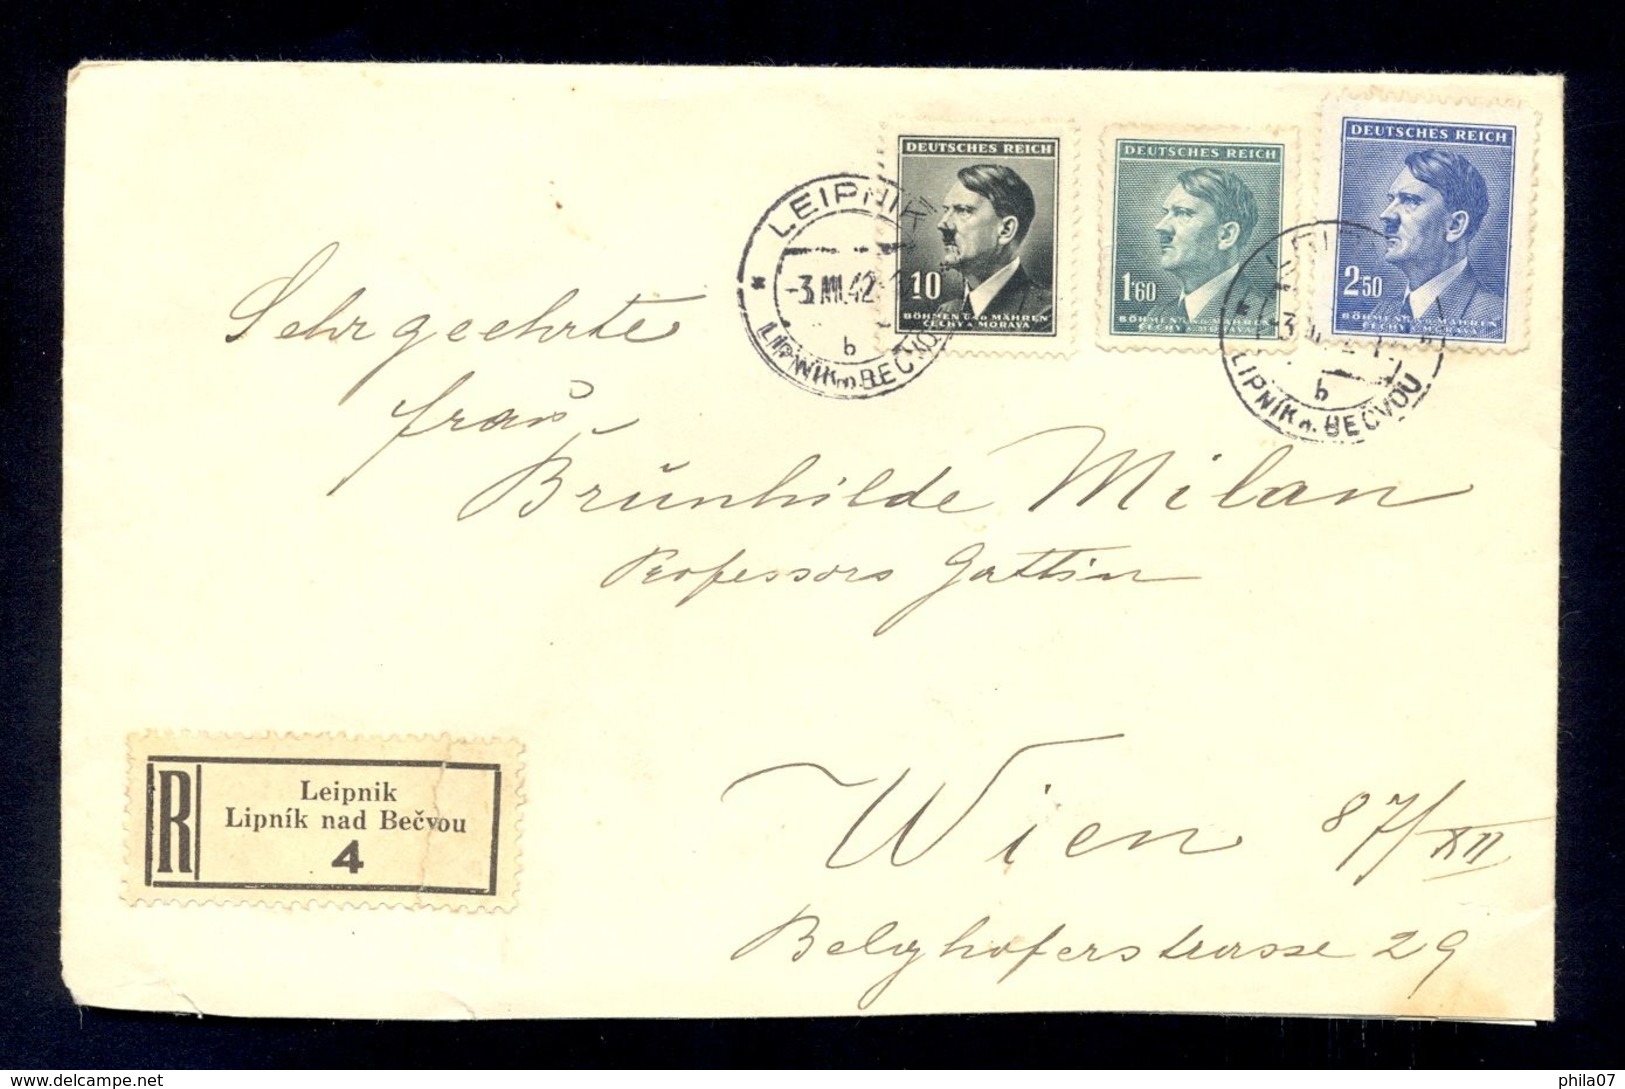 CZECHOSLOVAKIA PROTECTORATE - Envelope Sent By Registered Mail From Leipnik Lipnik Nad Bečvou To Wien 1942 - Covers & Documents